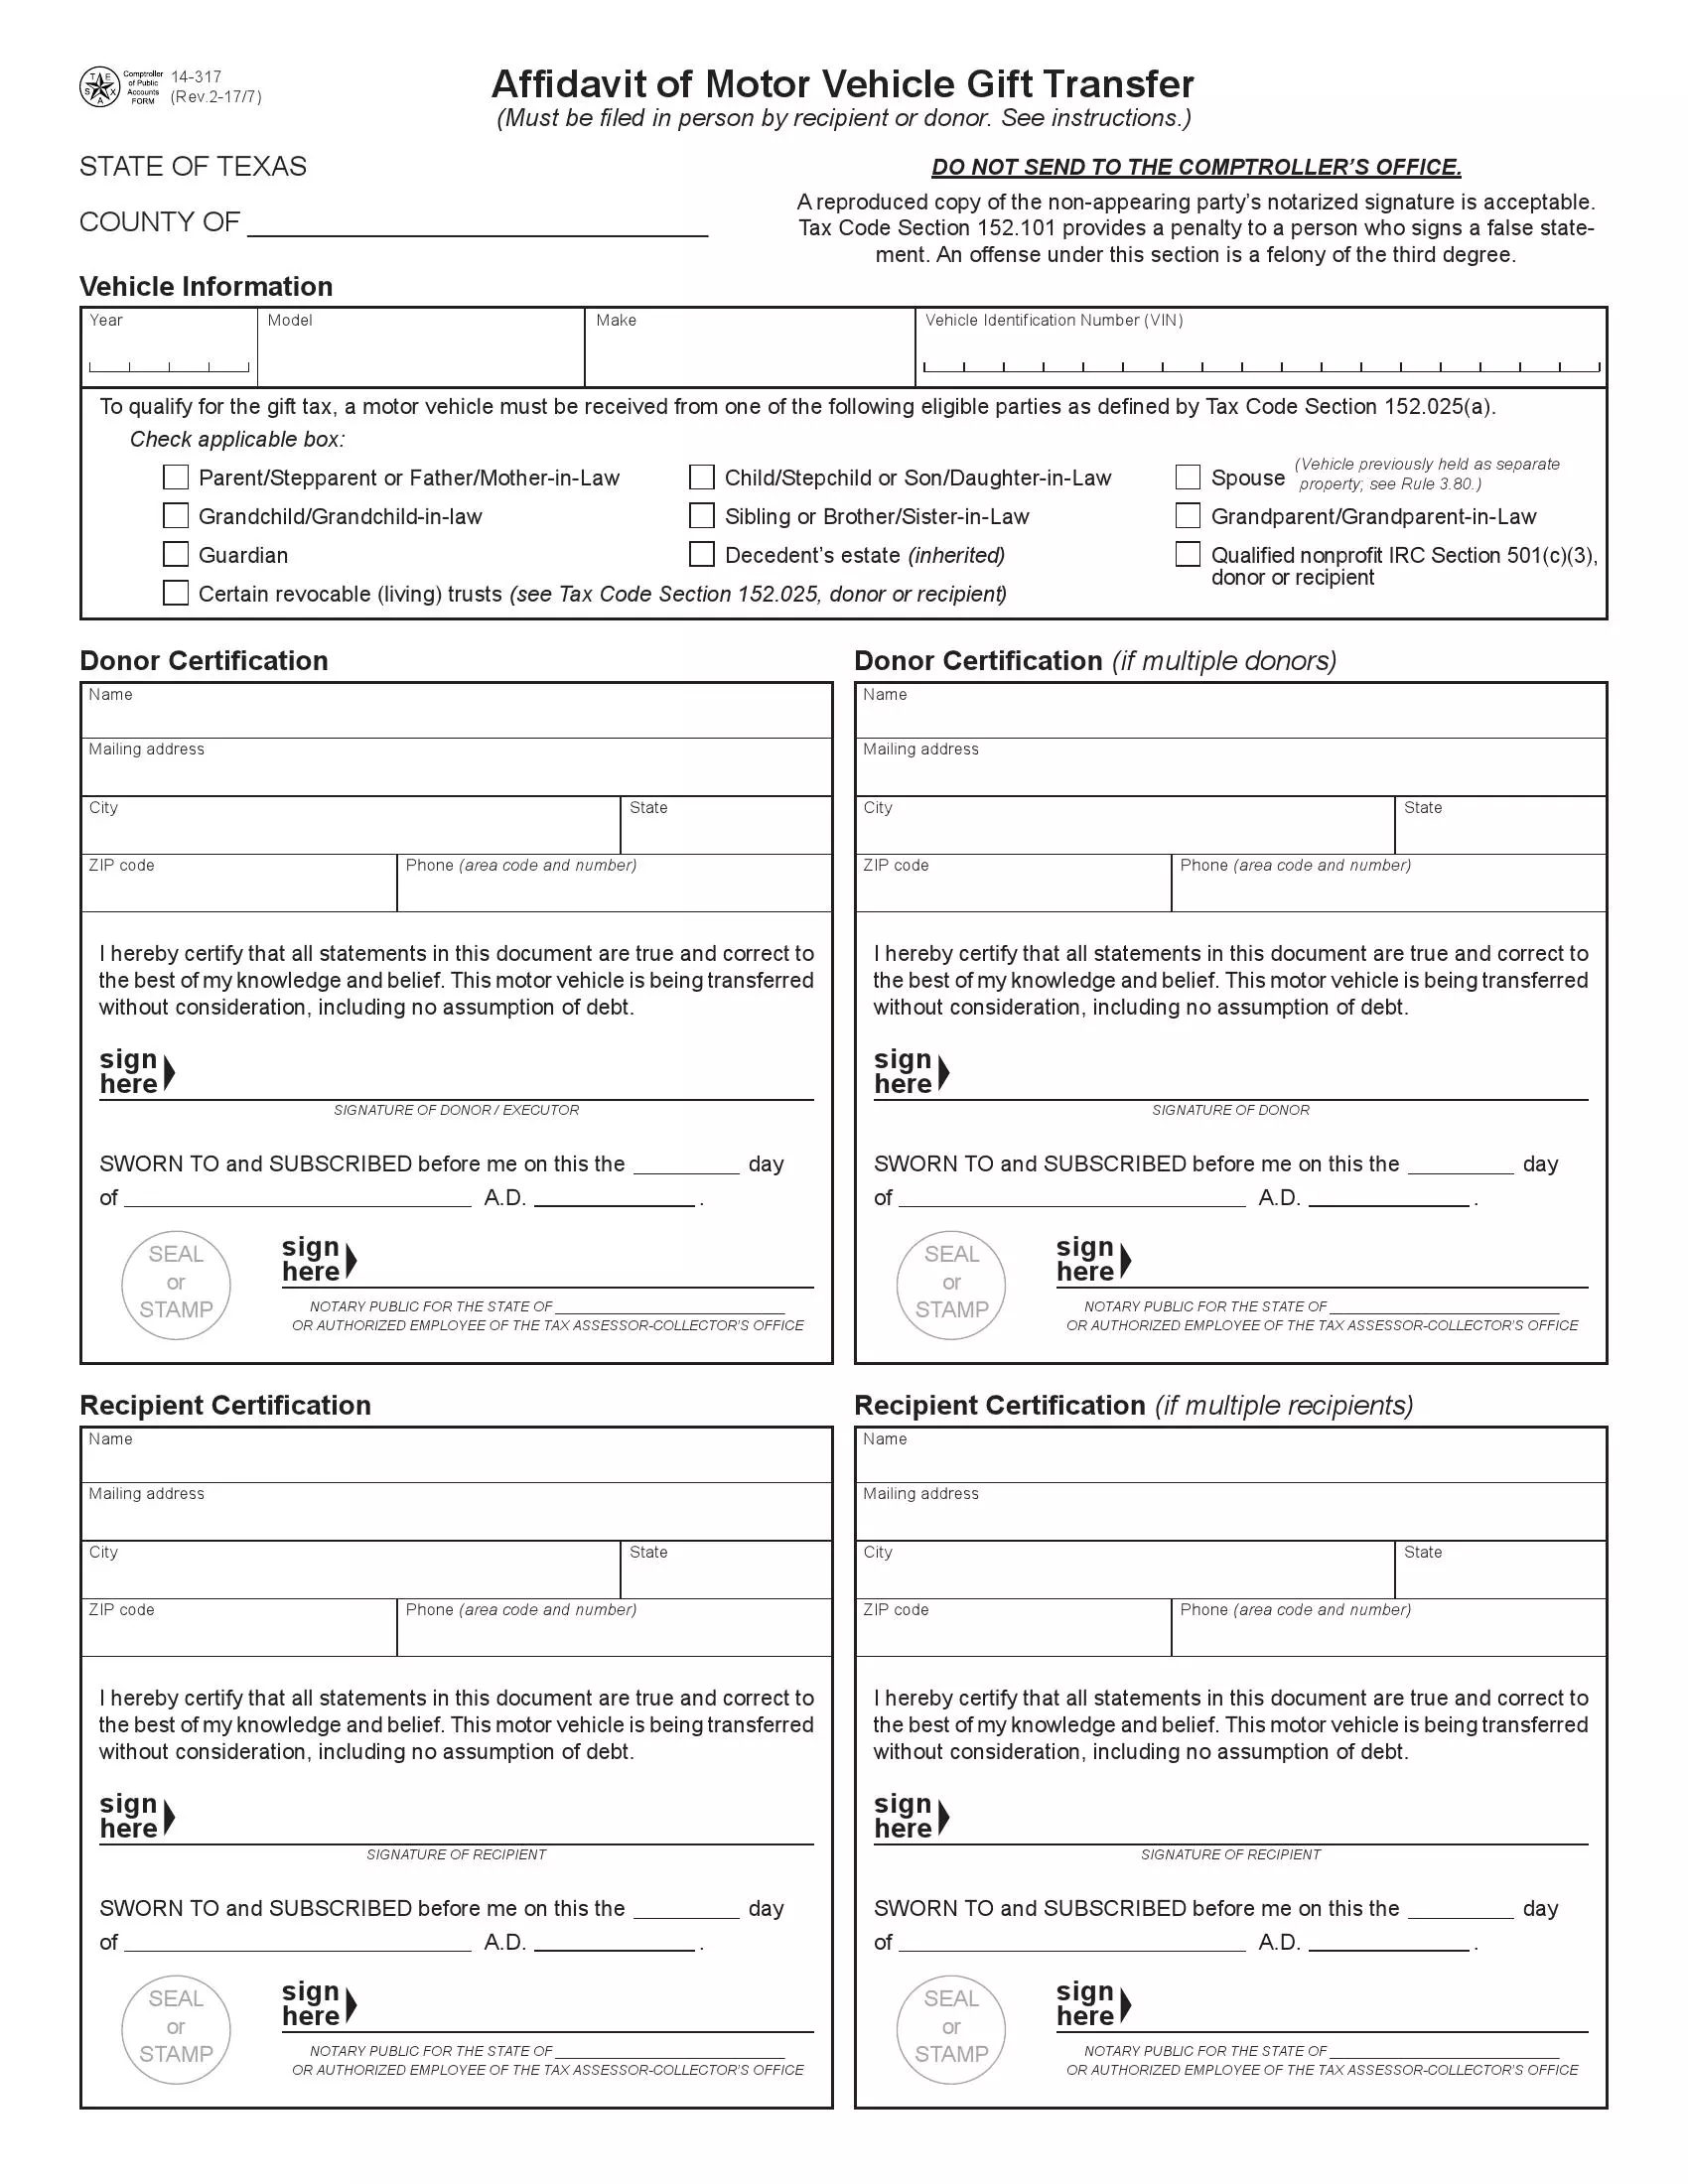 (Vehicle) Form 14-317